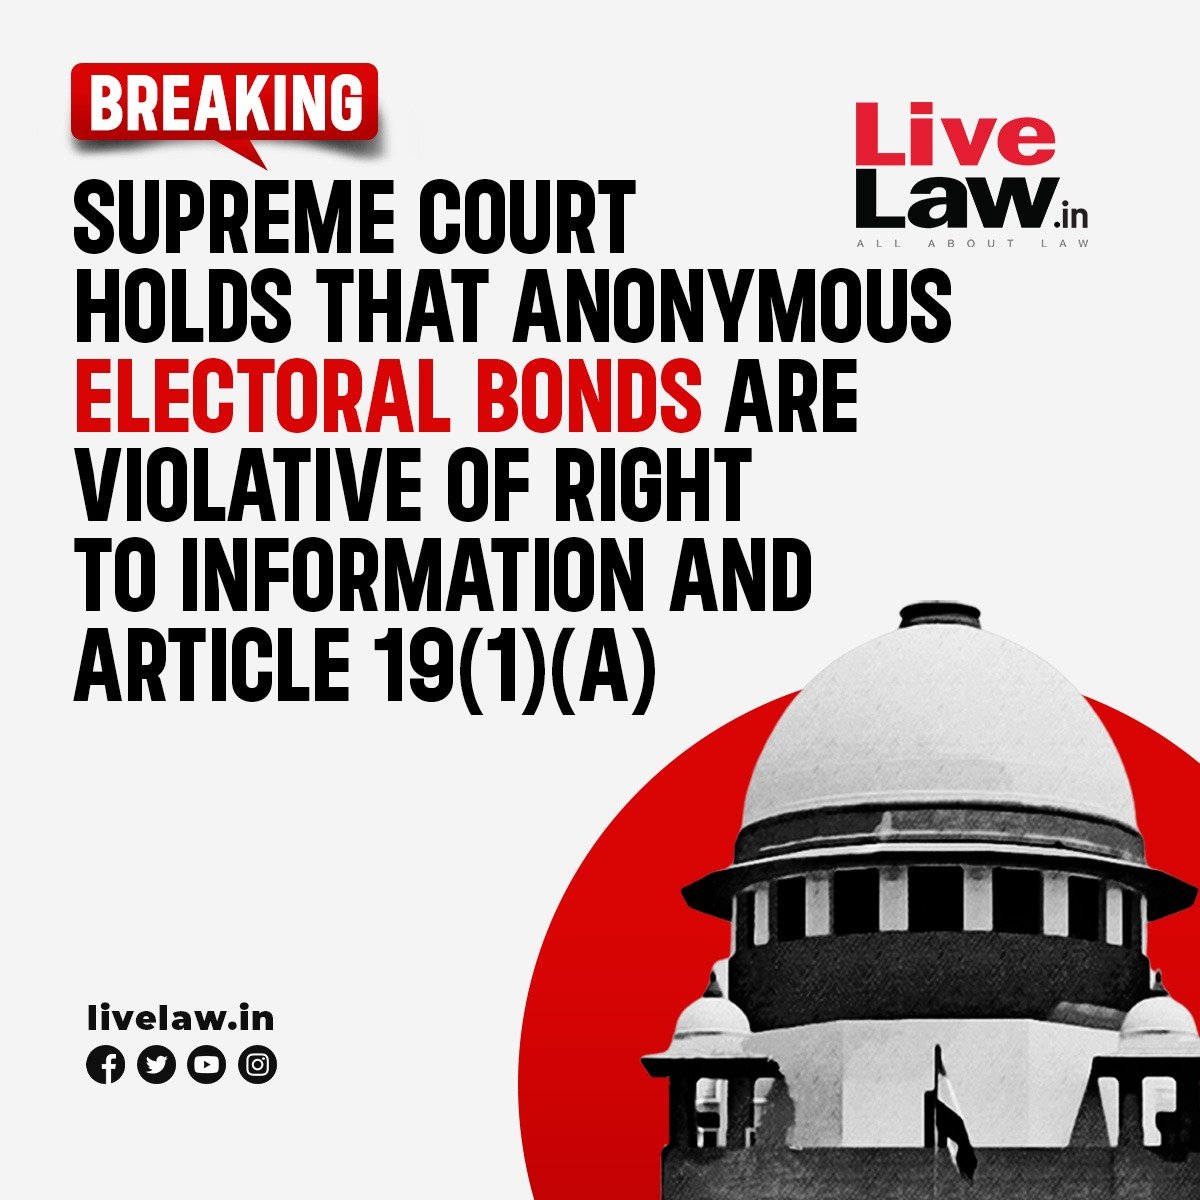 Breaking:
#SupremeCourtofIndia #ElectoralBonds